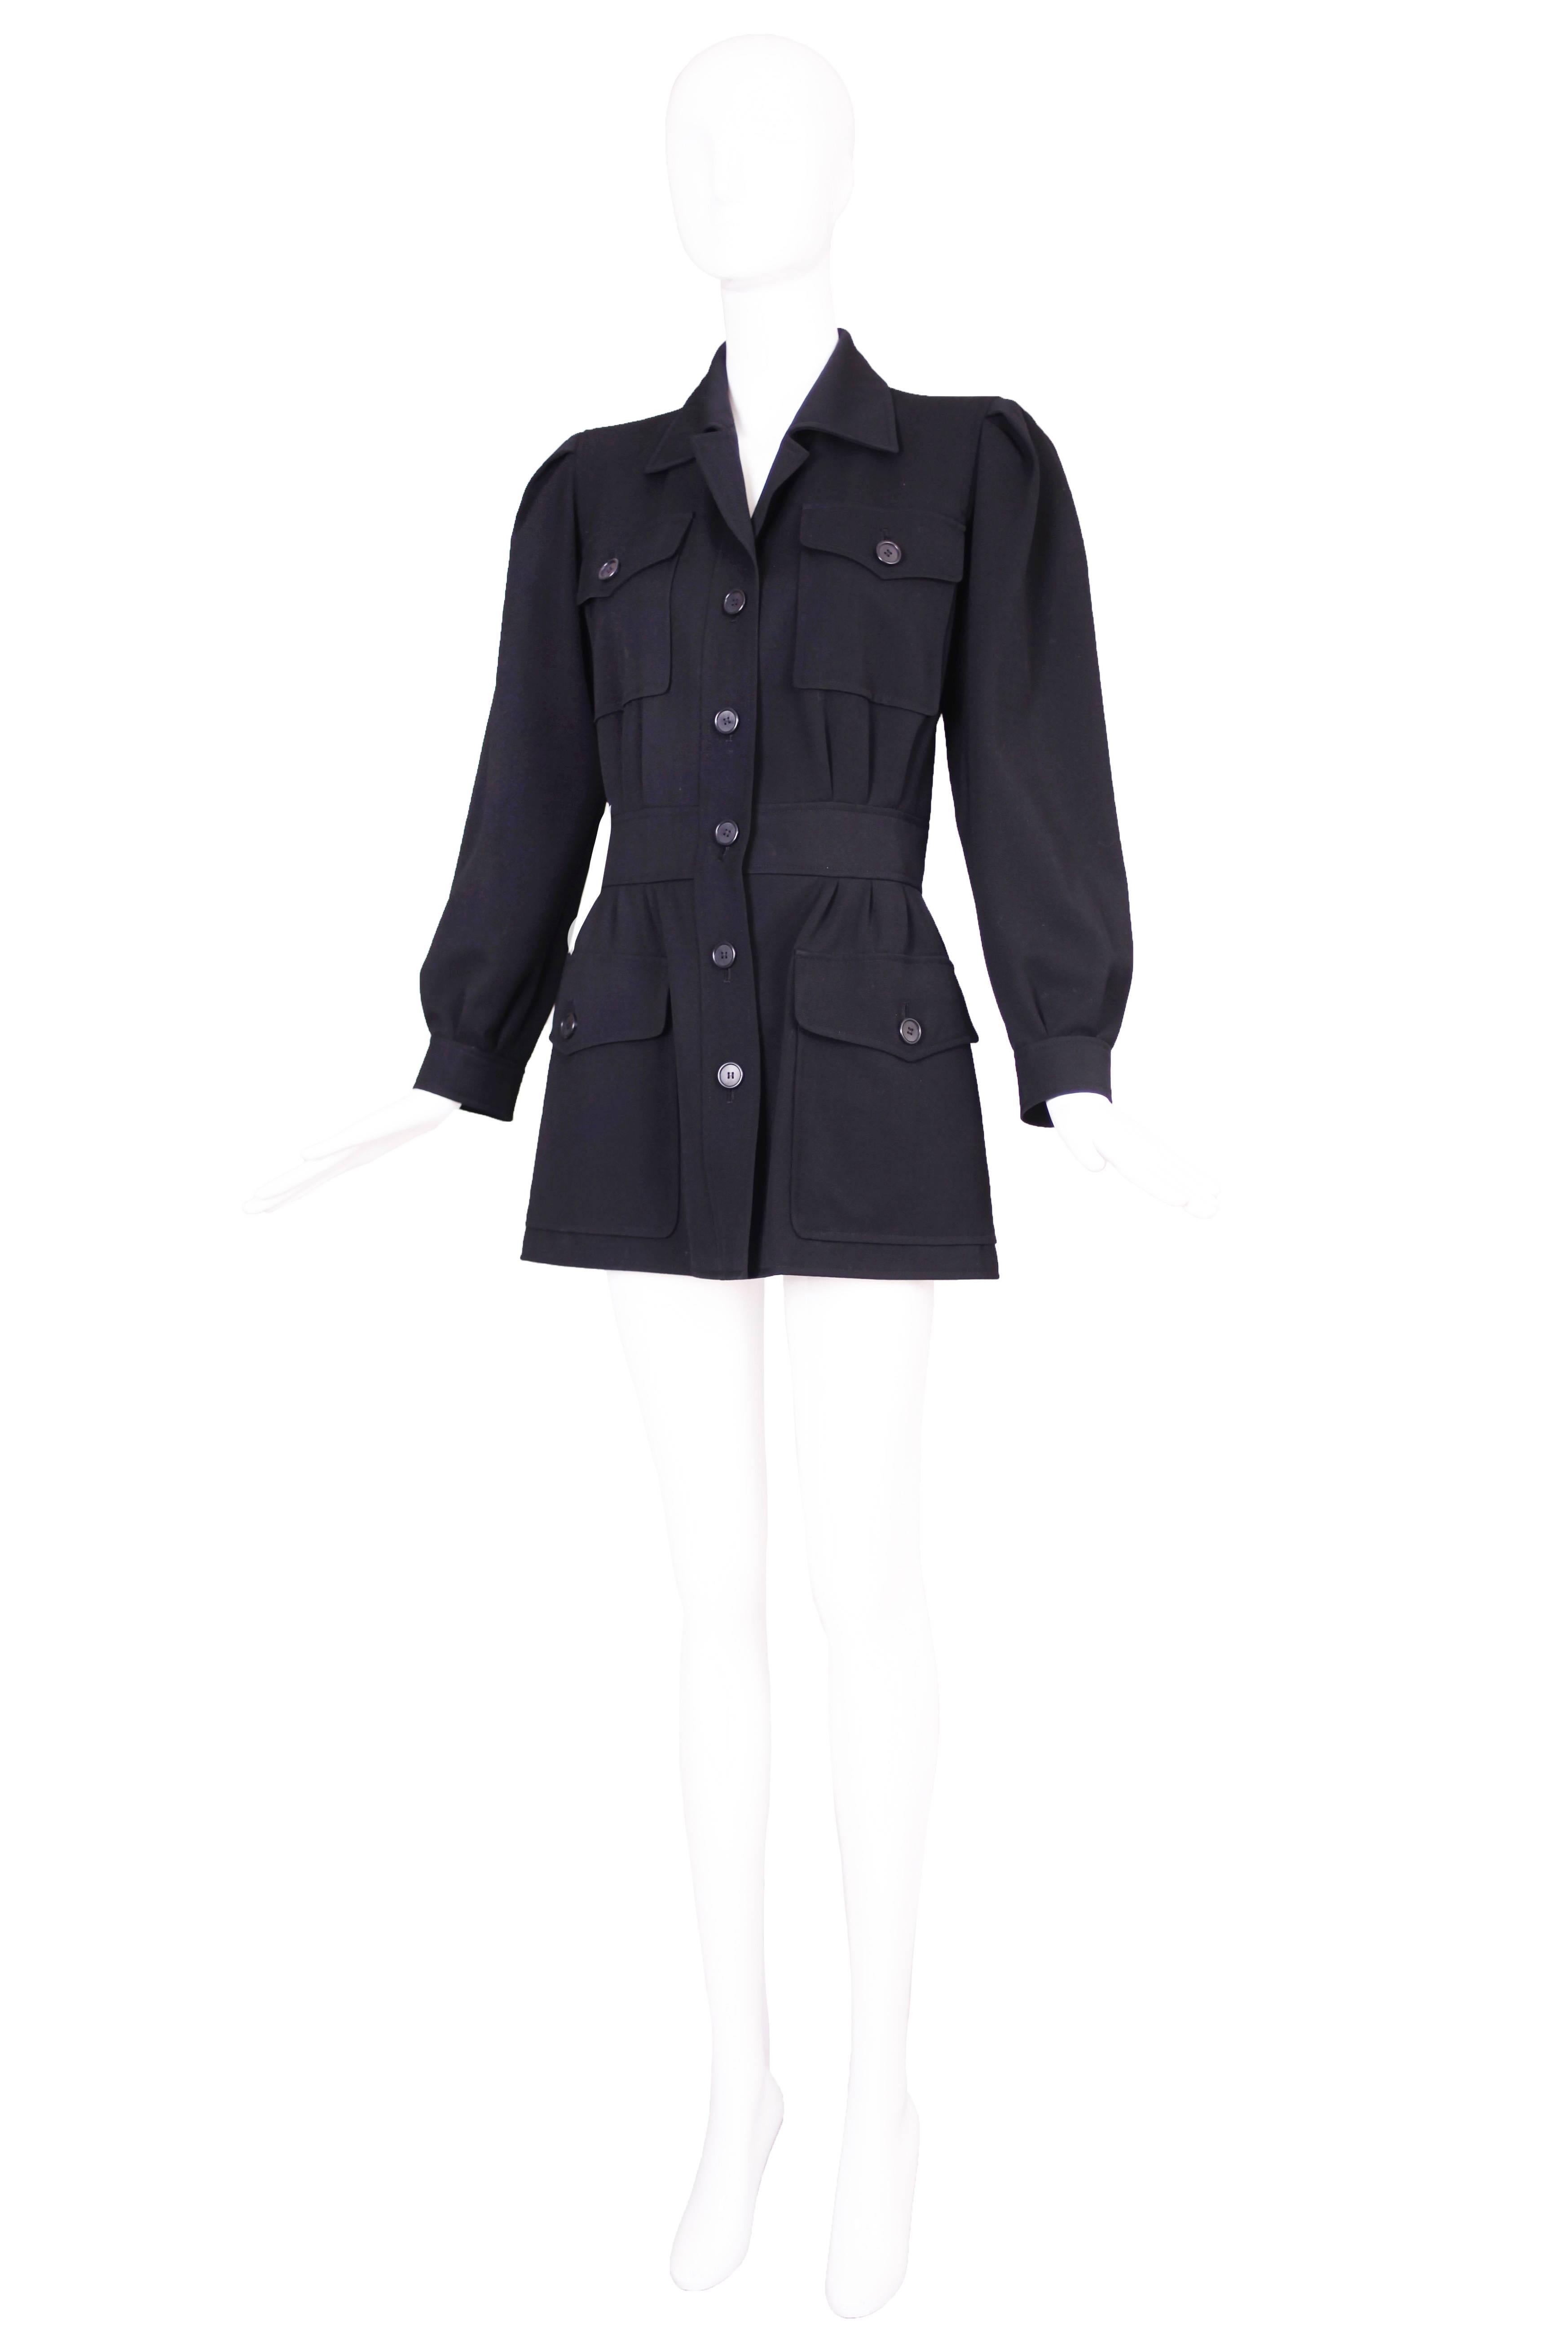 Iconic Yves Saint Laurent safari style deep navy blue gabardine jacket. In excellent condition. Size 38.
MEASUREMENTS